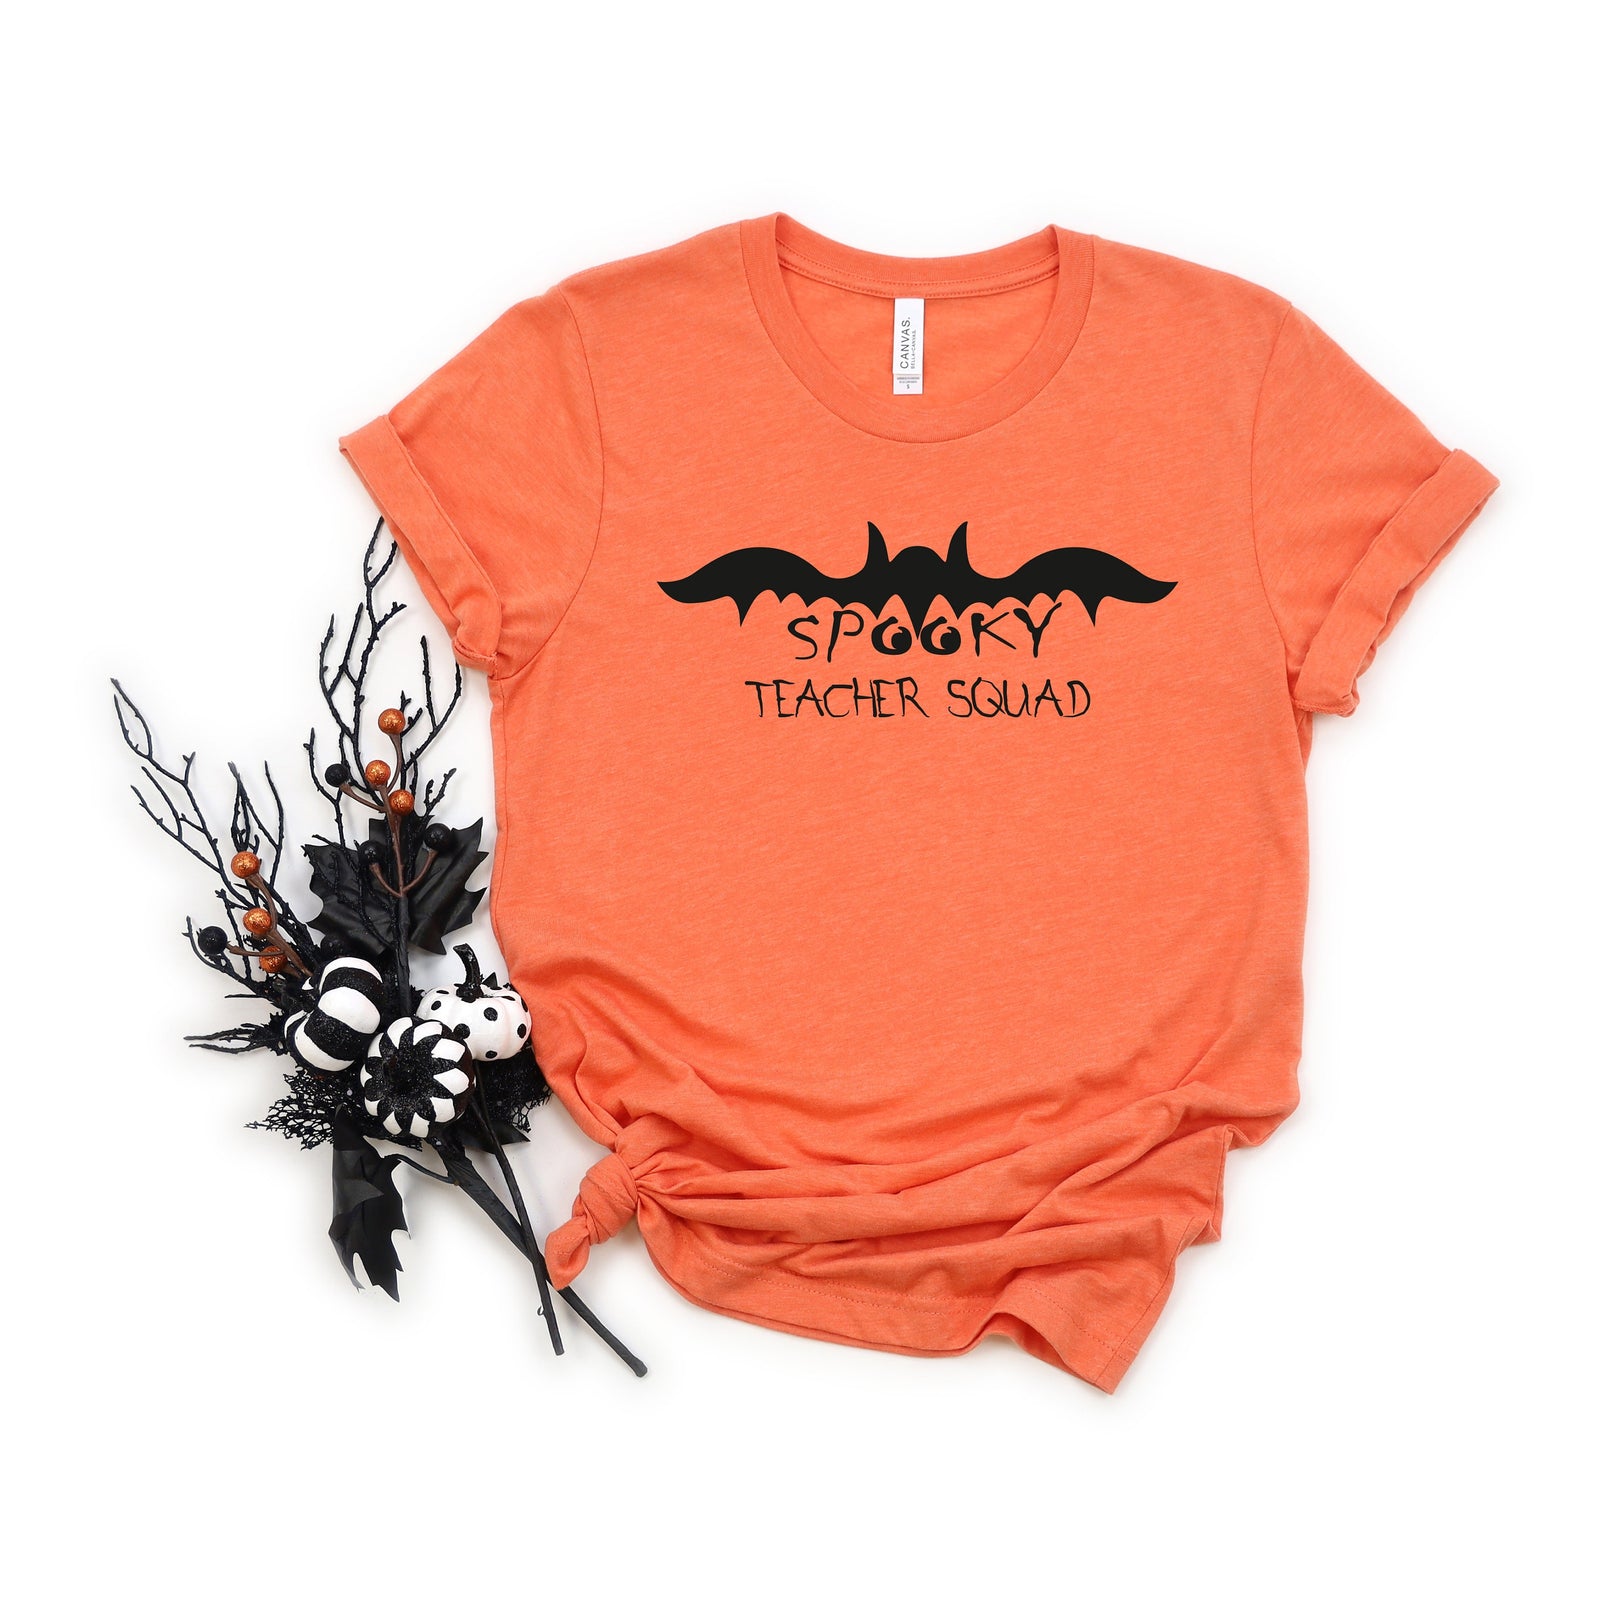 Spooky Teacher Squad Adult T Shirt - Halloween - Office - School - Teacher - Grade Level - Fun Not So Scary Bats